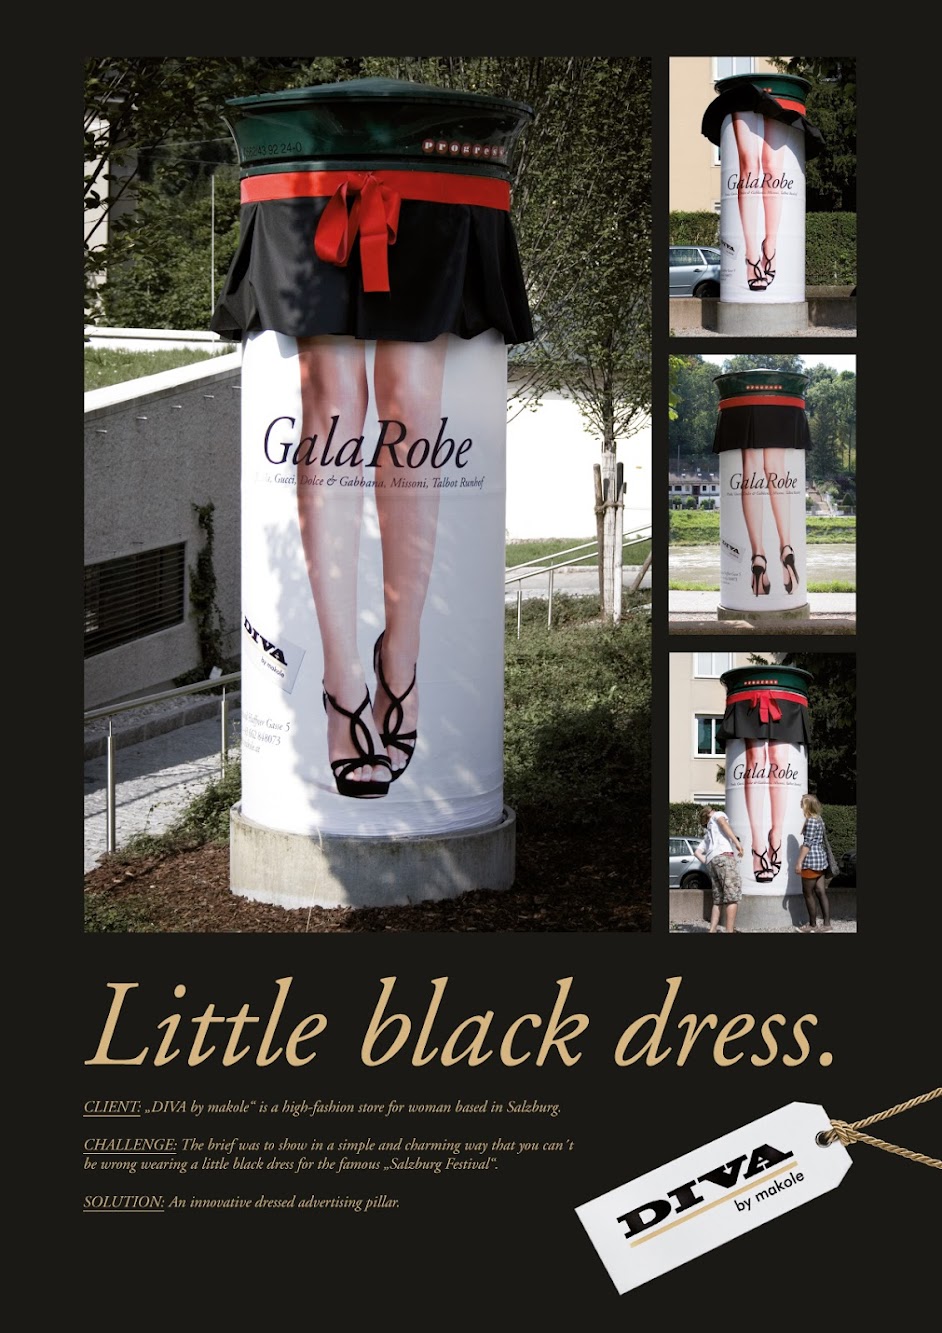 That Little Black Dress Found It's Way On To A Pillar